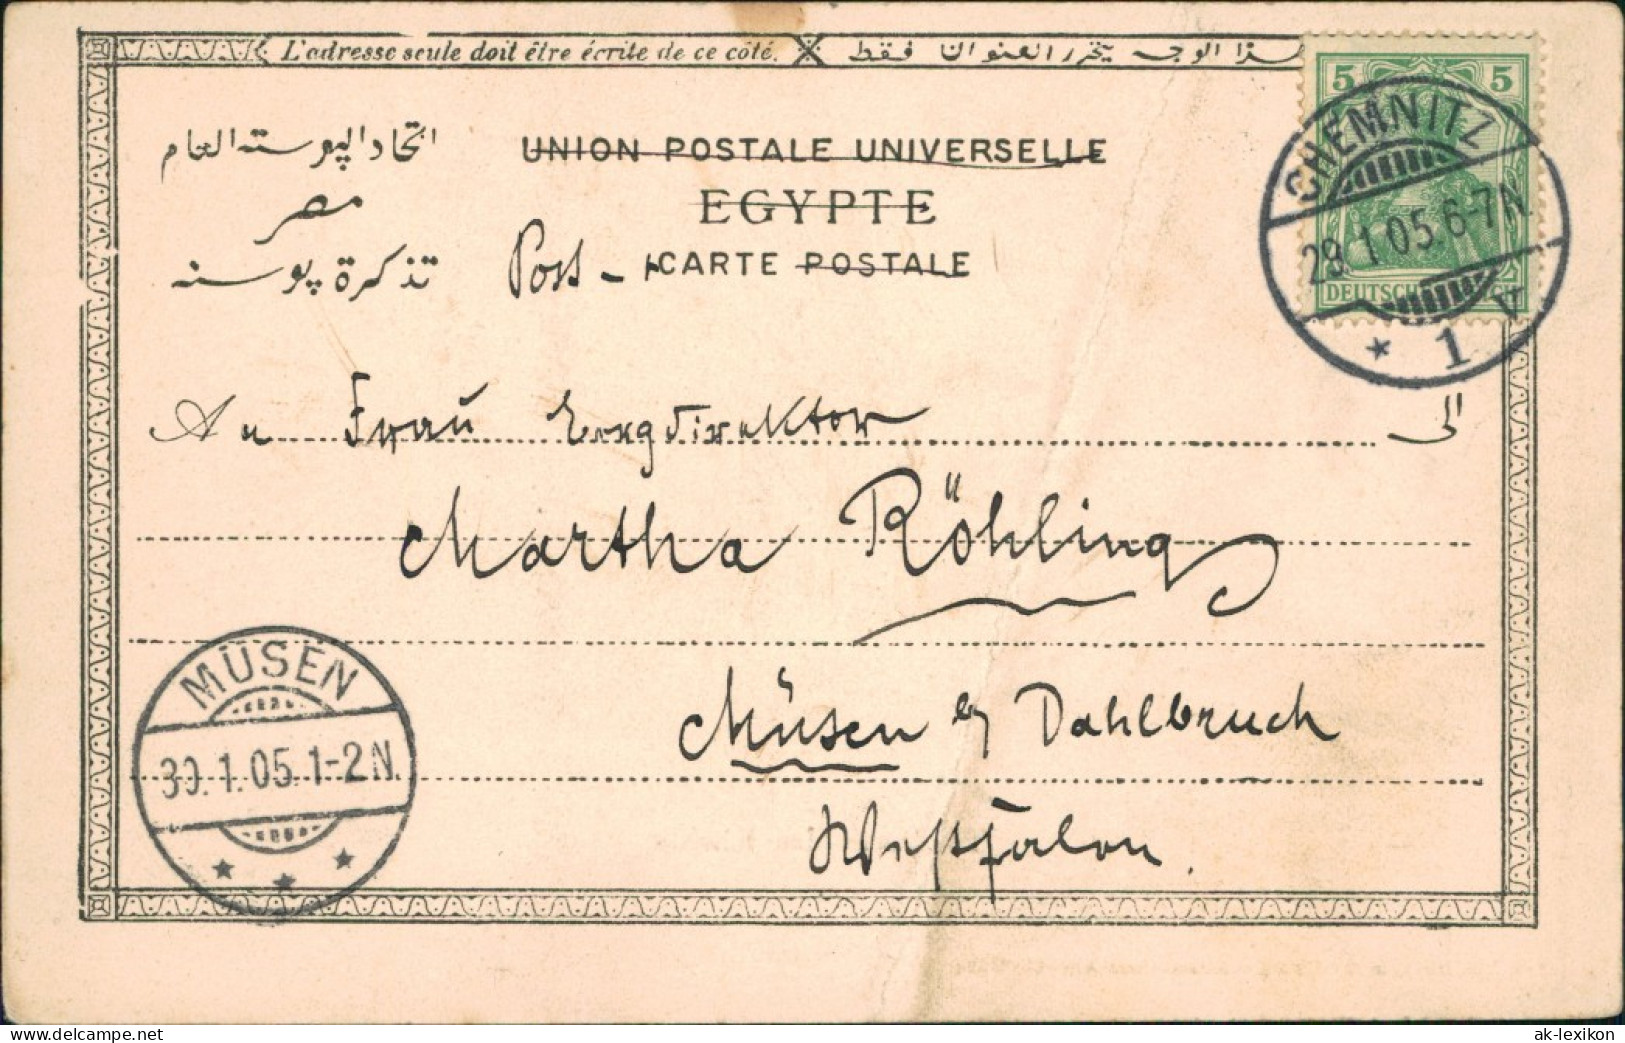 Kairo القاهرة Tombeaux Des Khalifs 1905 - Kairo